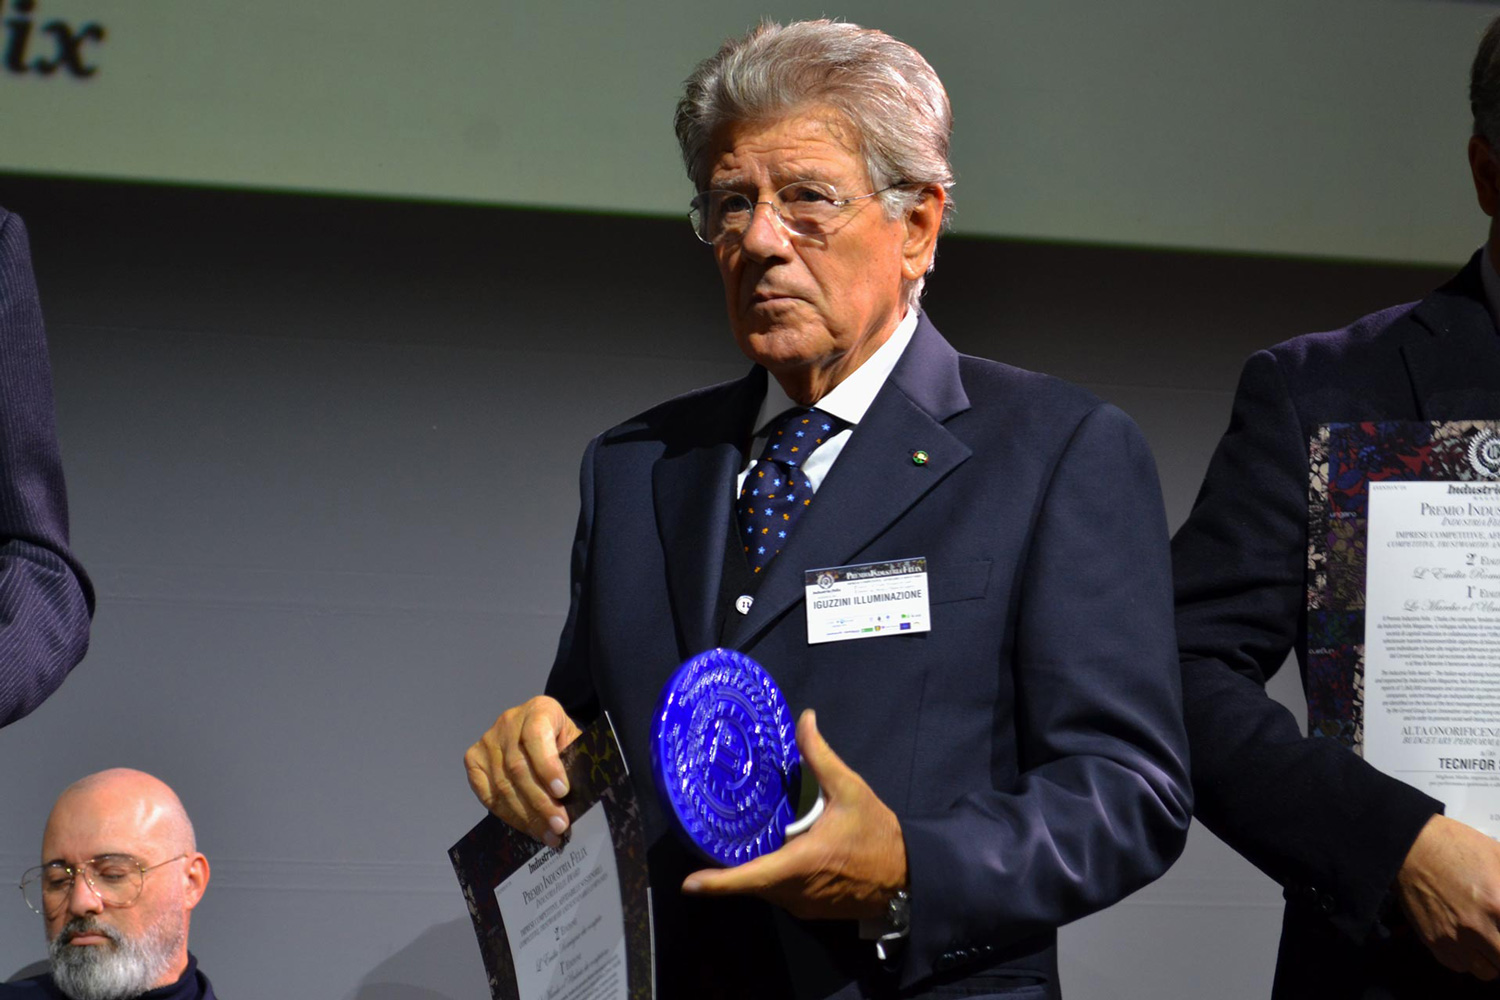 iGuzzini wins the Felix Industria Prize